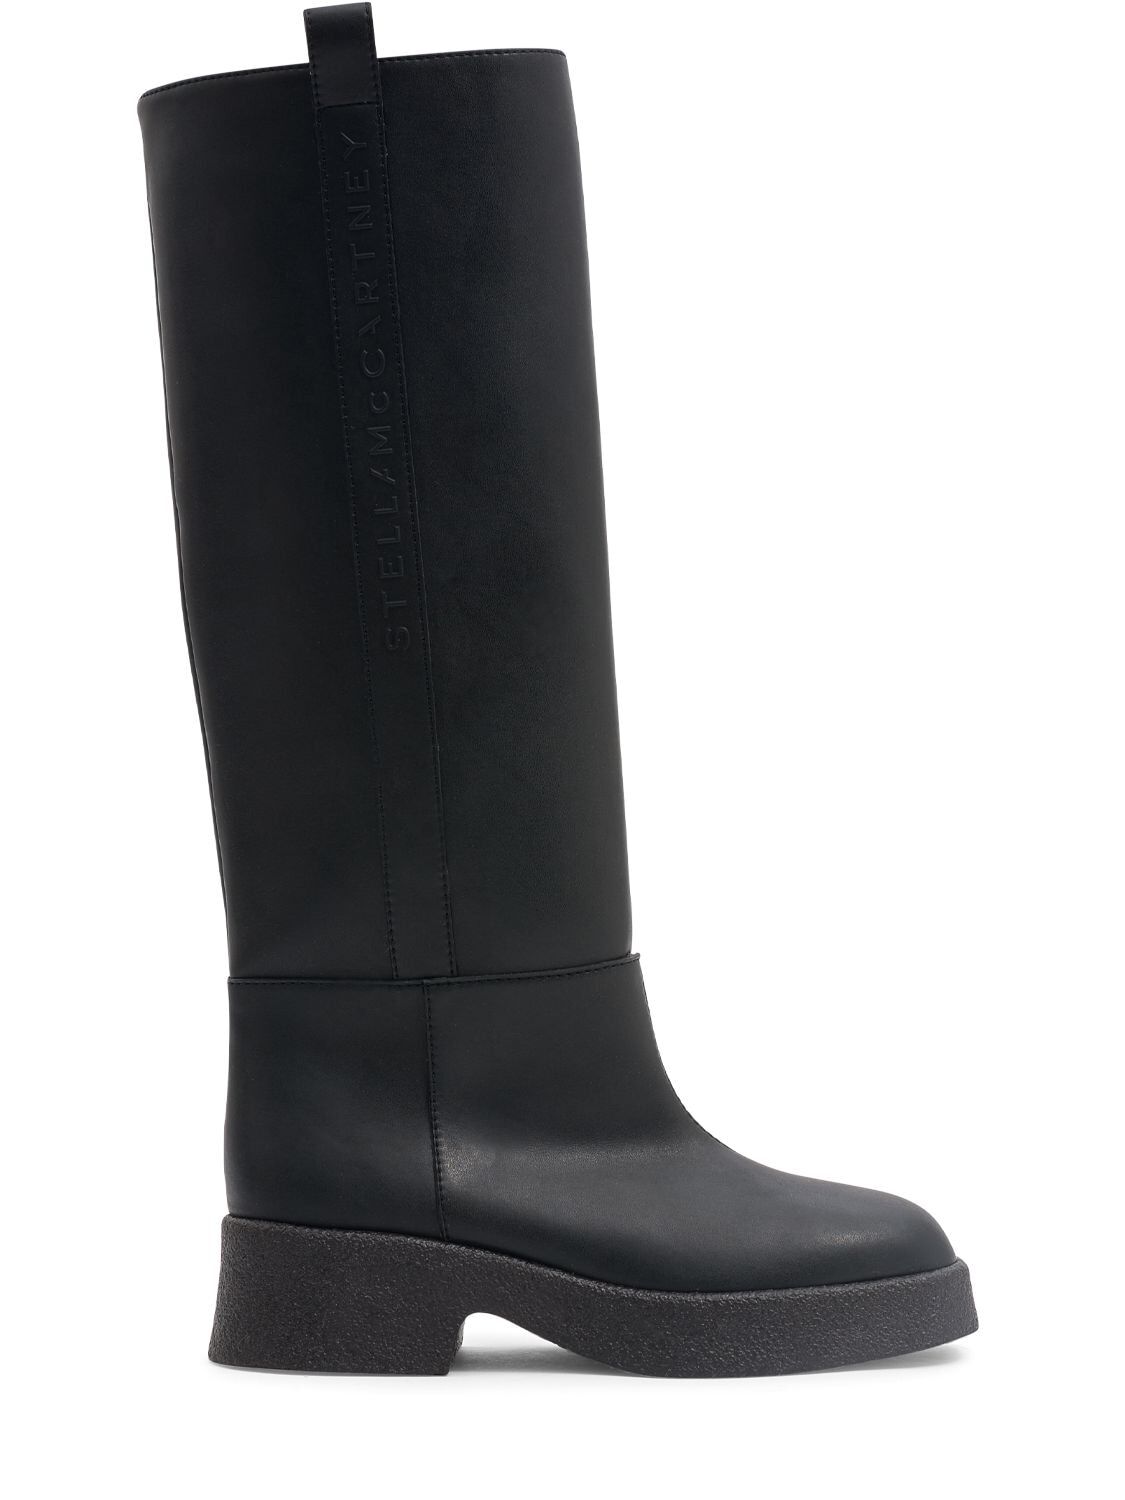 STELLA MCCARTNEY 40mm Skyla Faux Leather Tall Boots in black